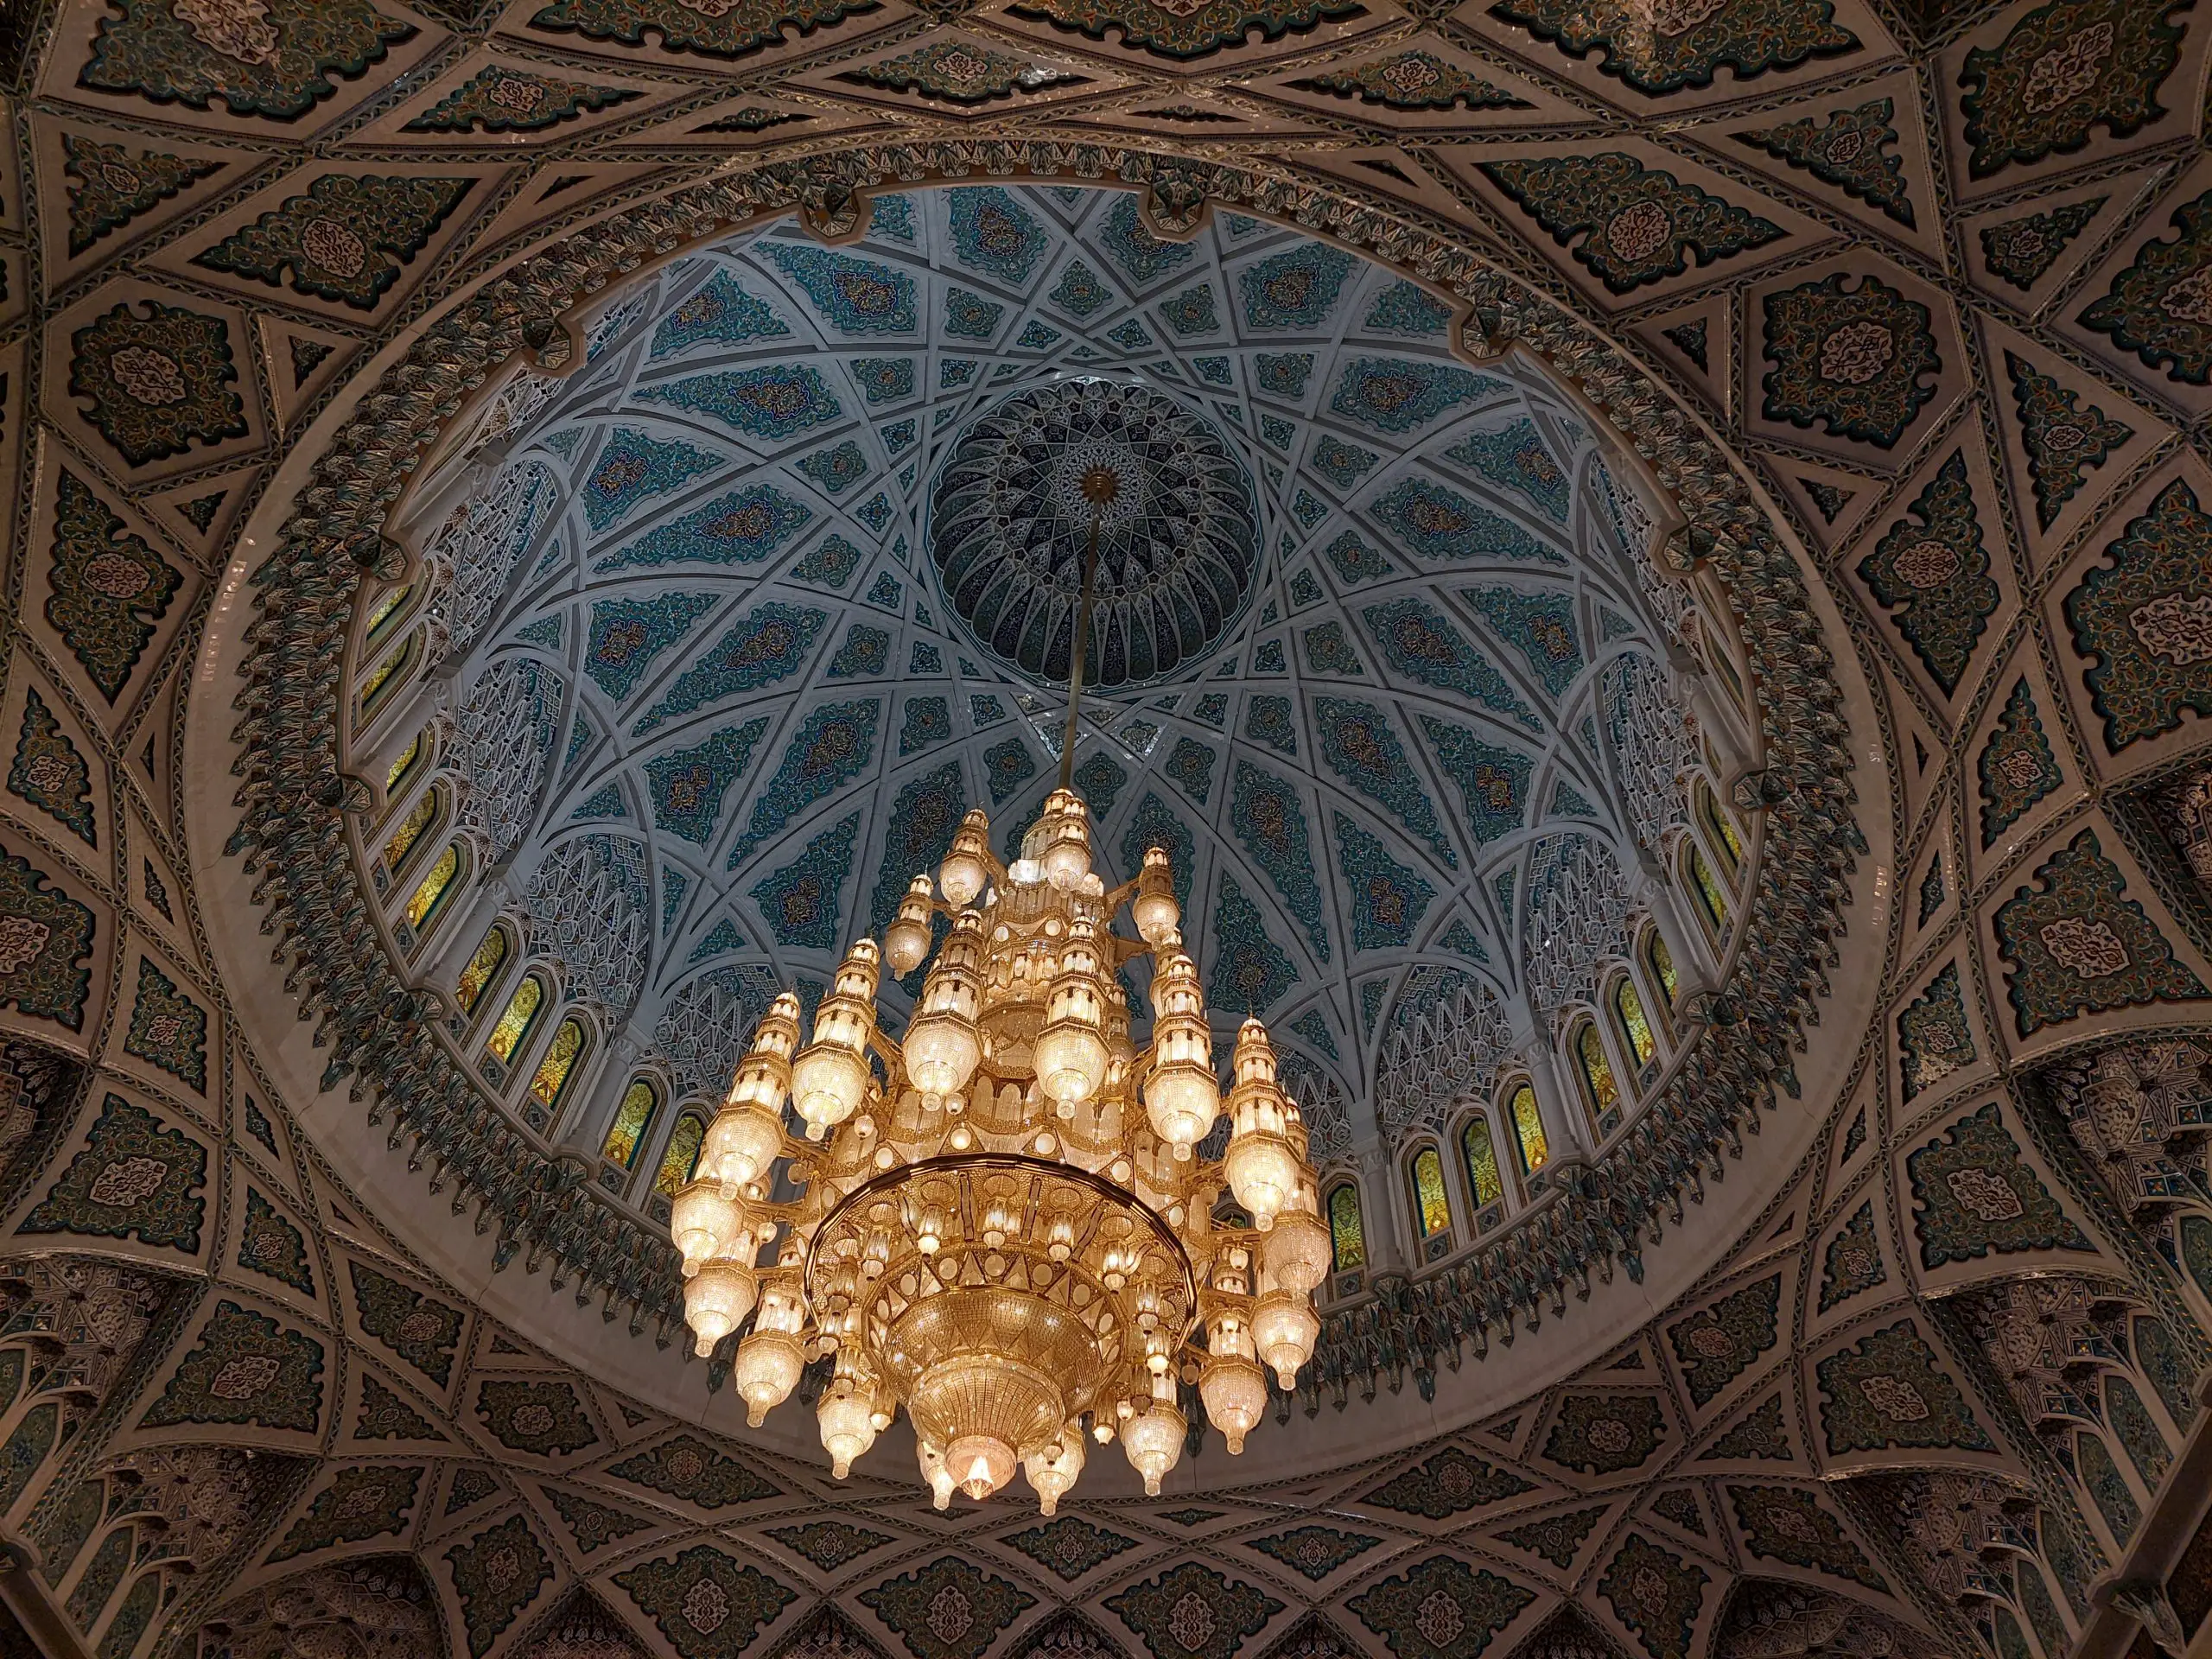 the swarowski chandelier inside the mosque in muscat